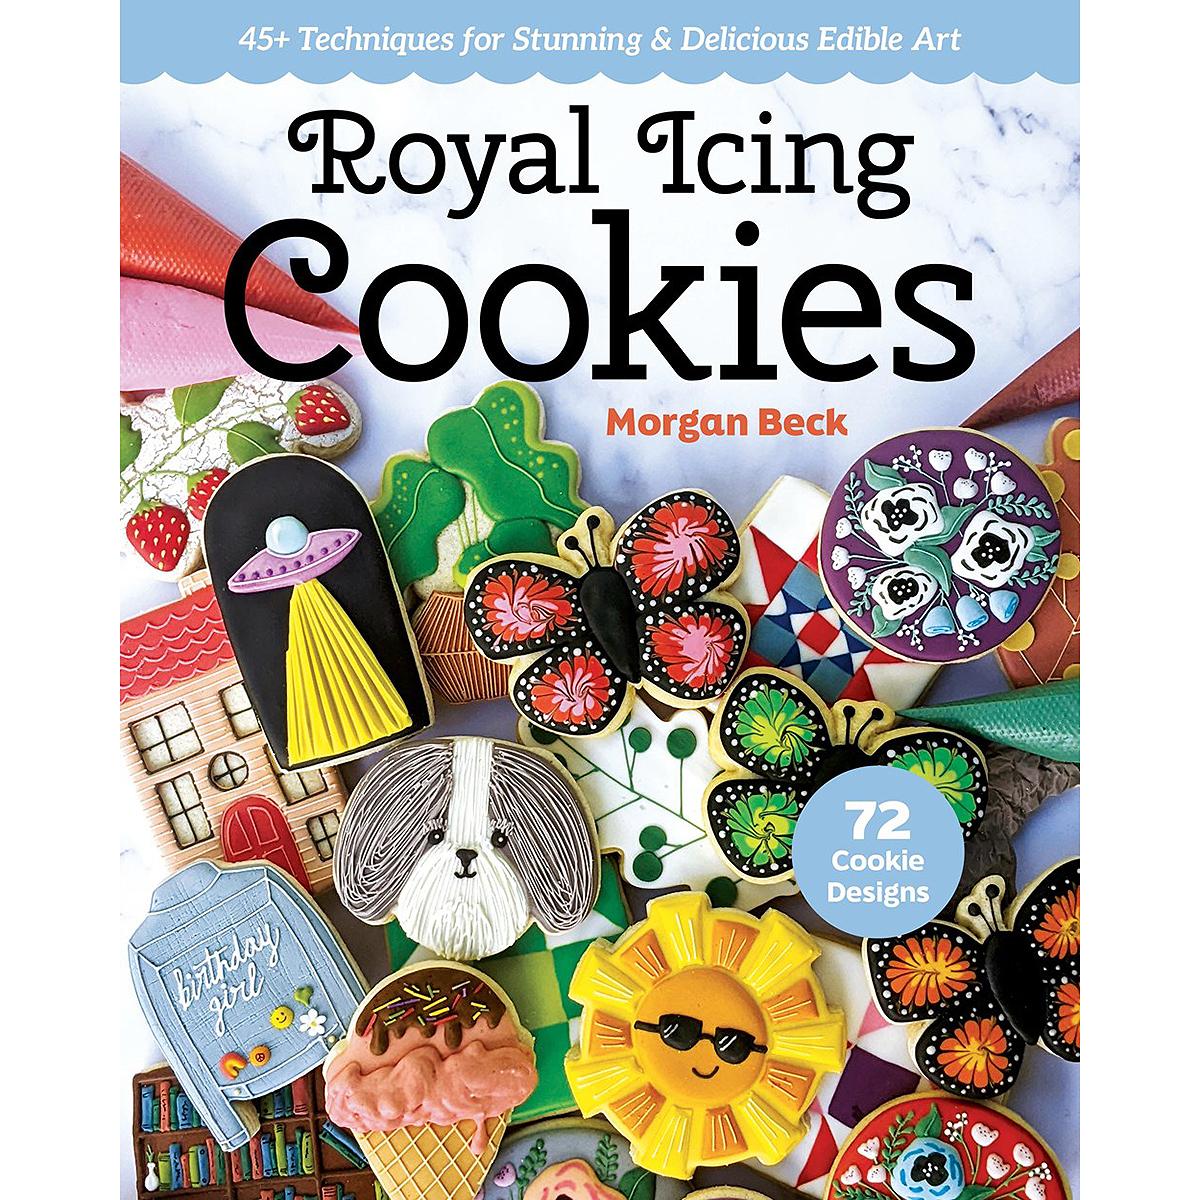 Royal Icing Cookies Morgan Beck